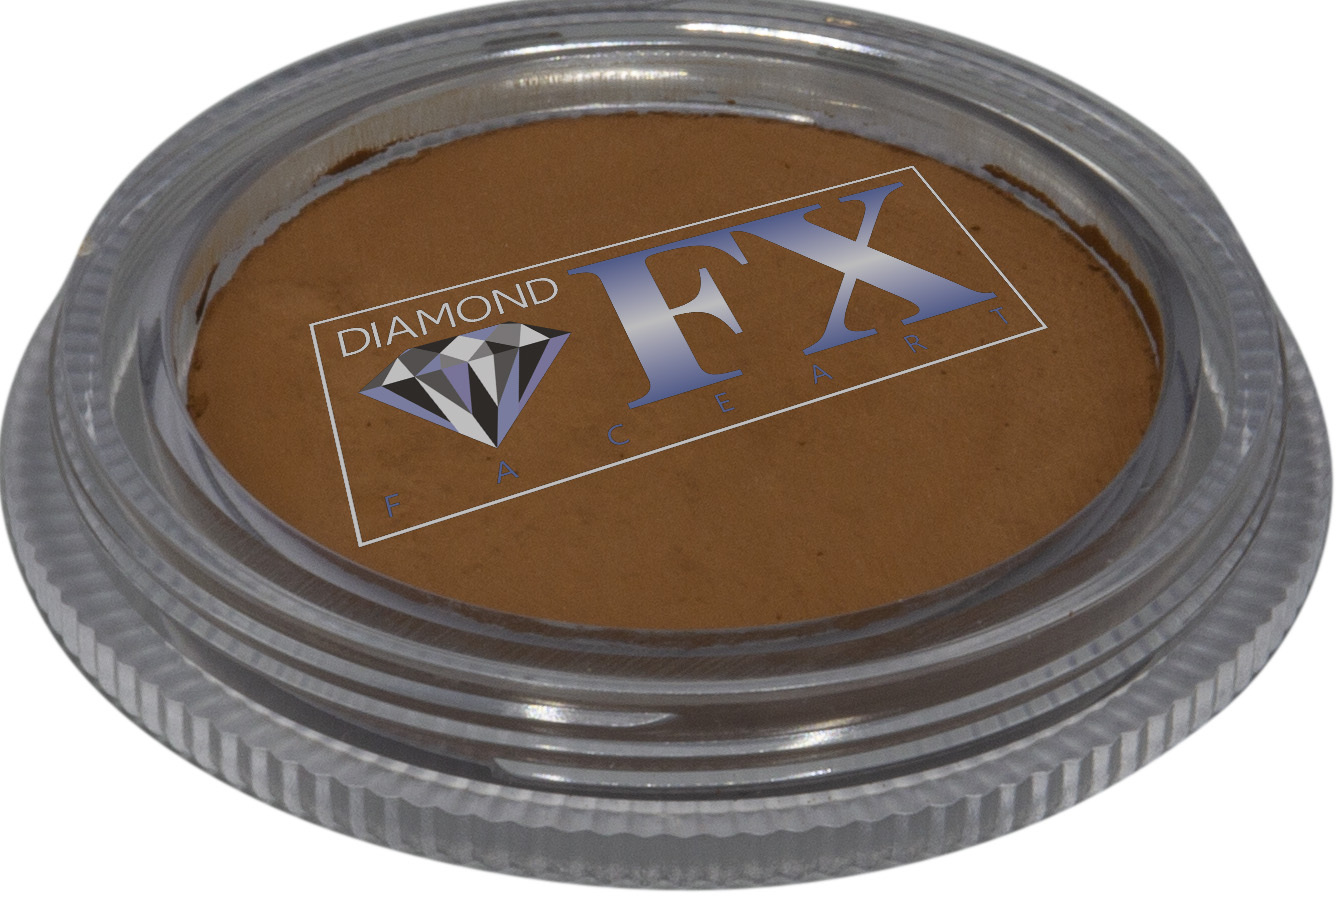 Diamond FX Light Brown 30g - Small Image